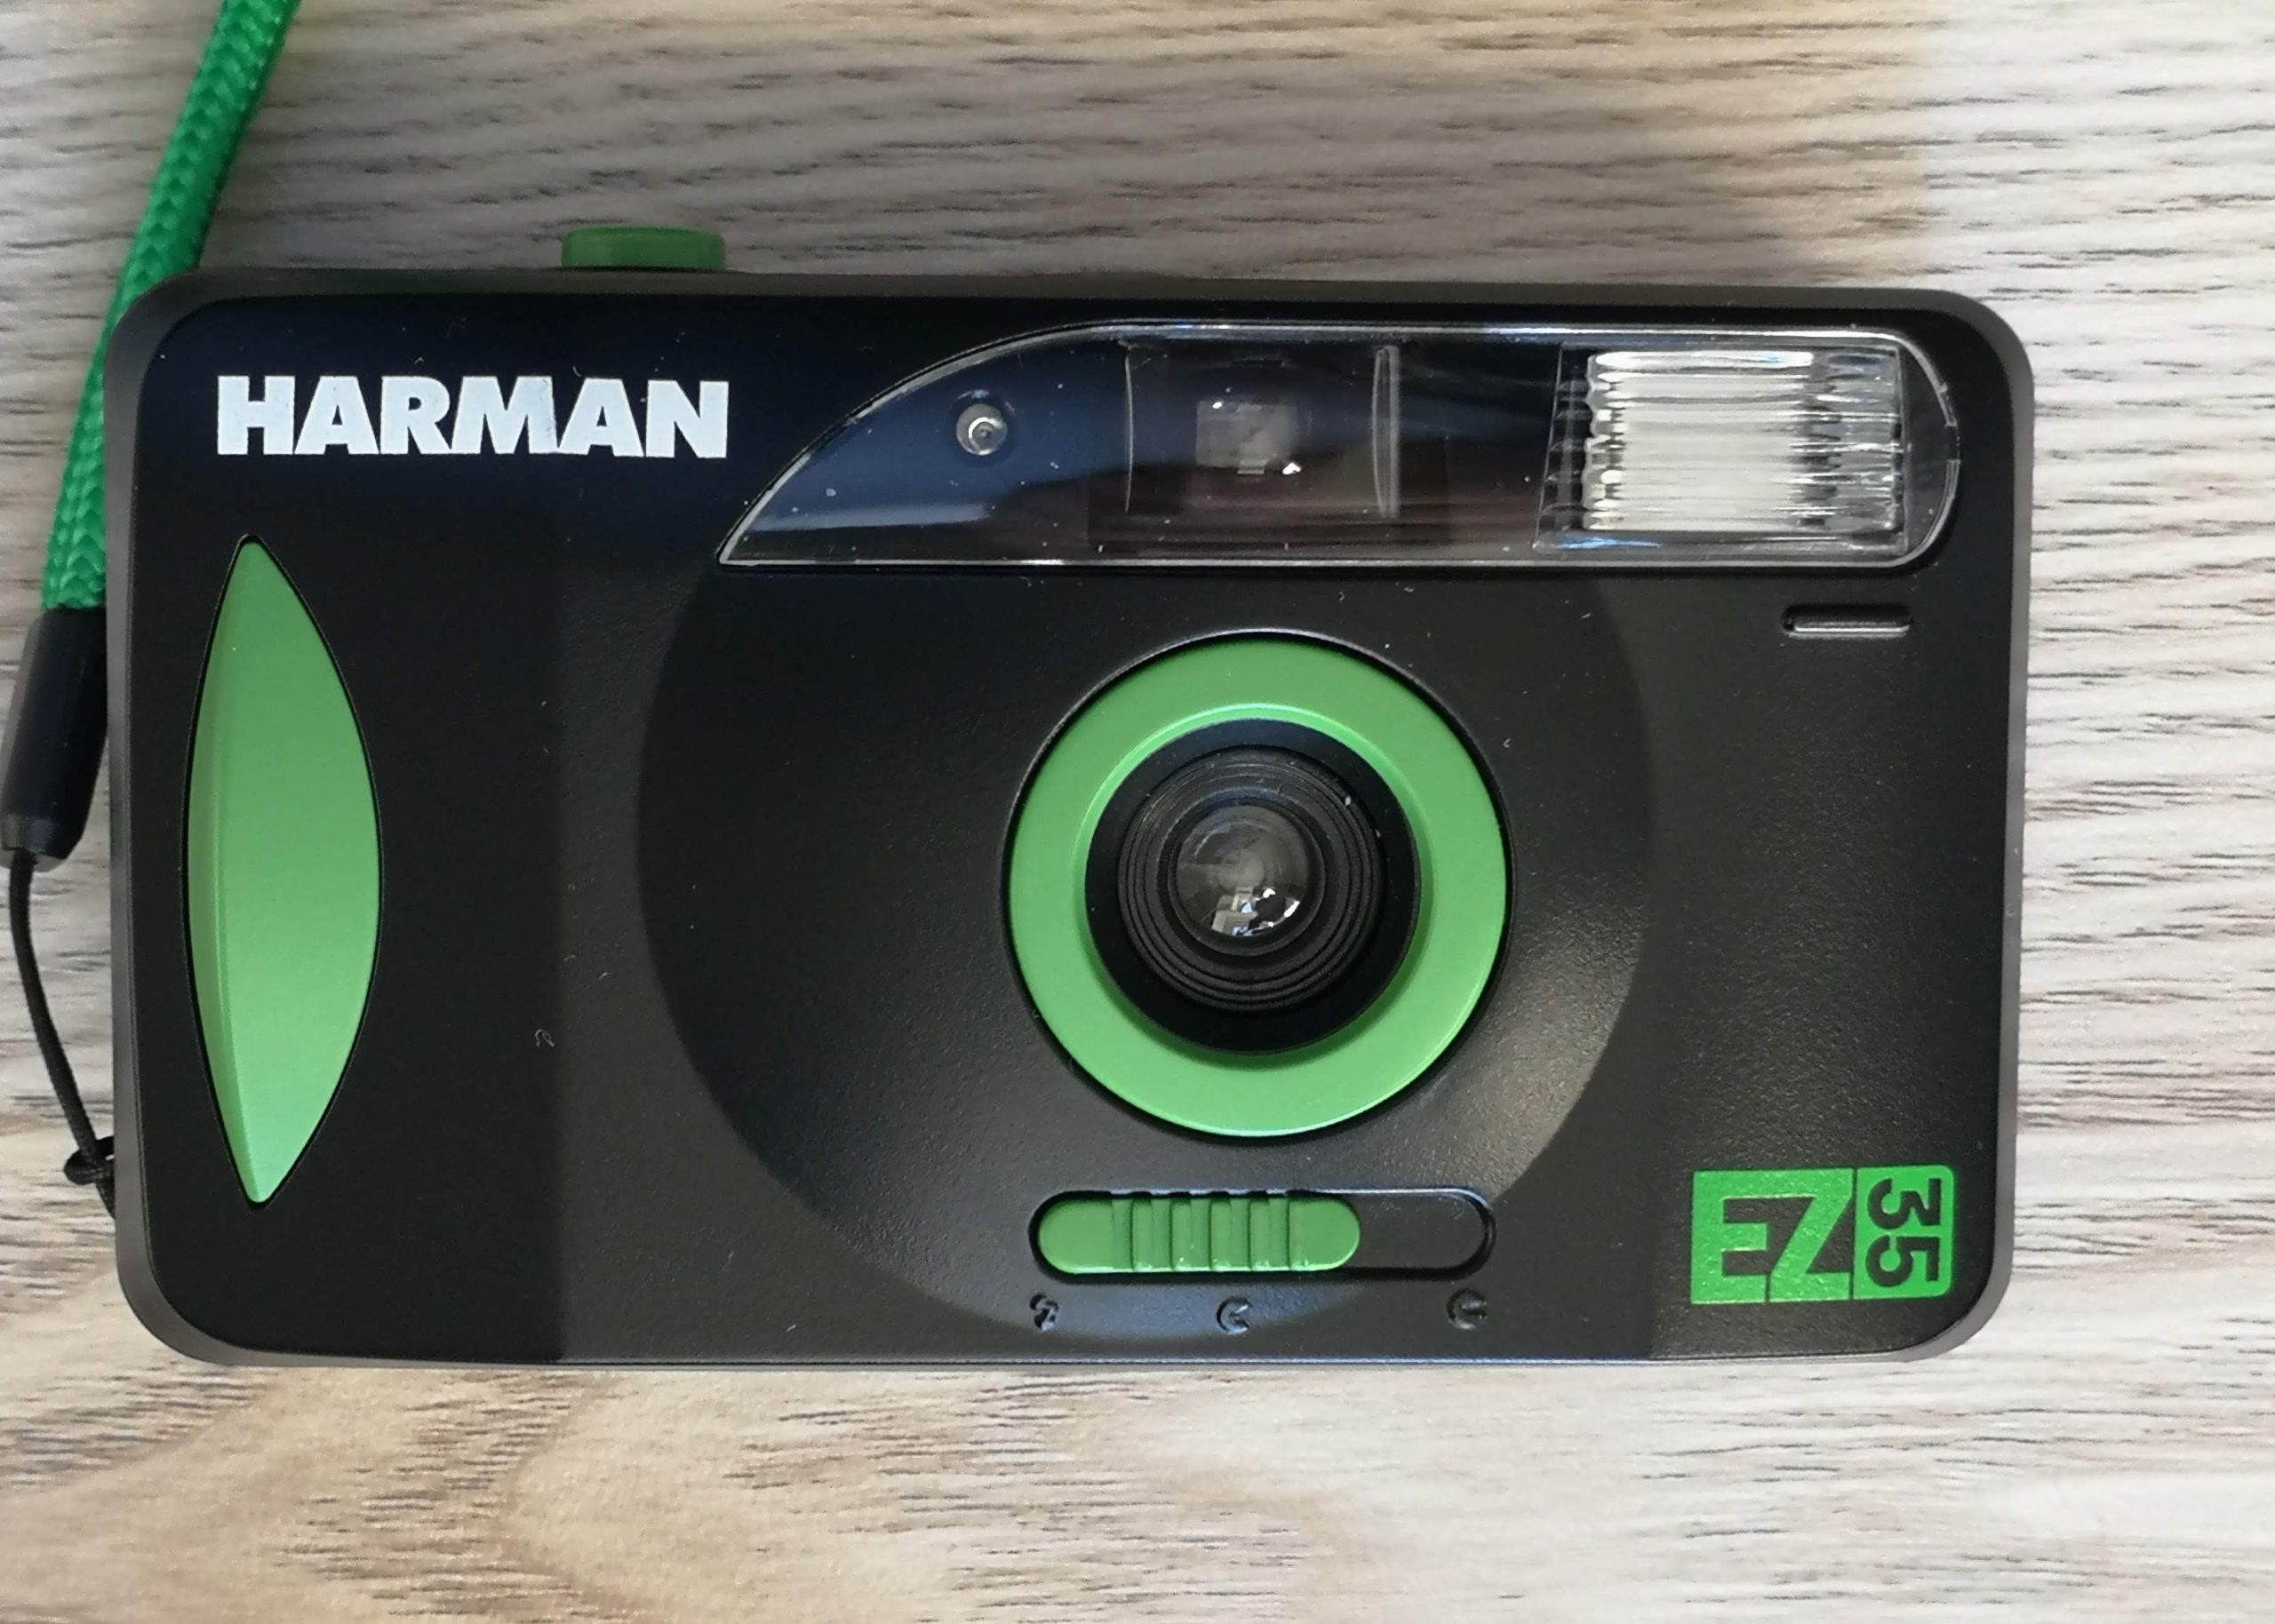 Harman EZ35